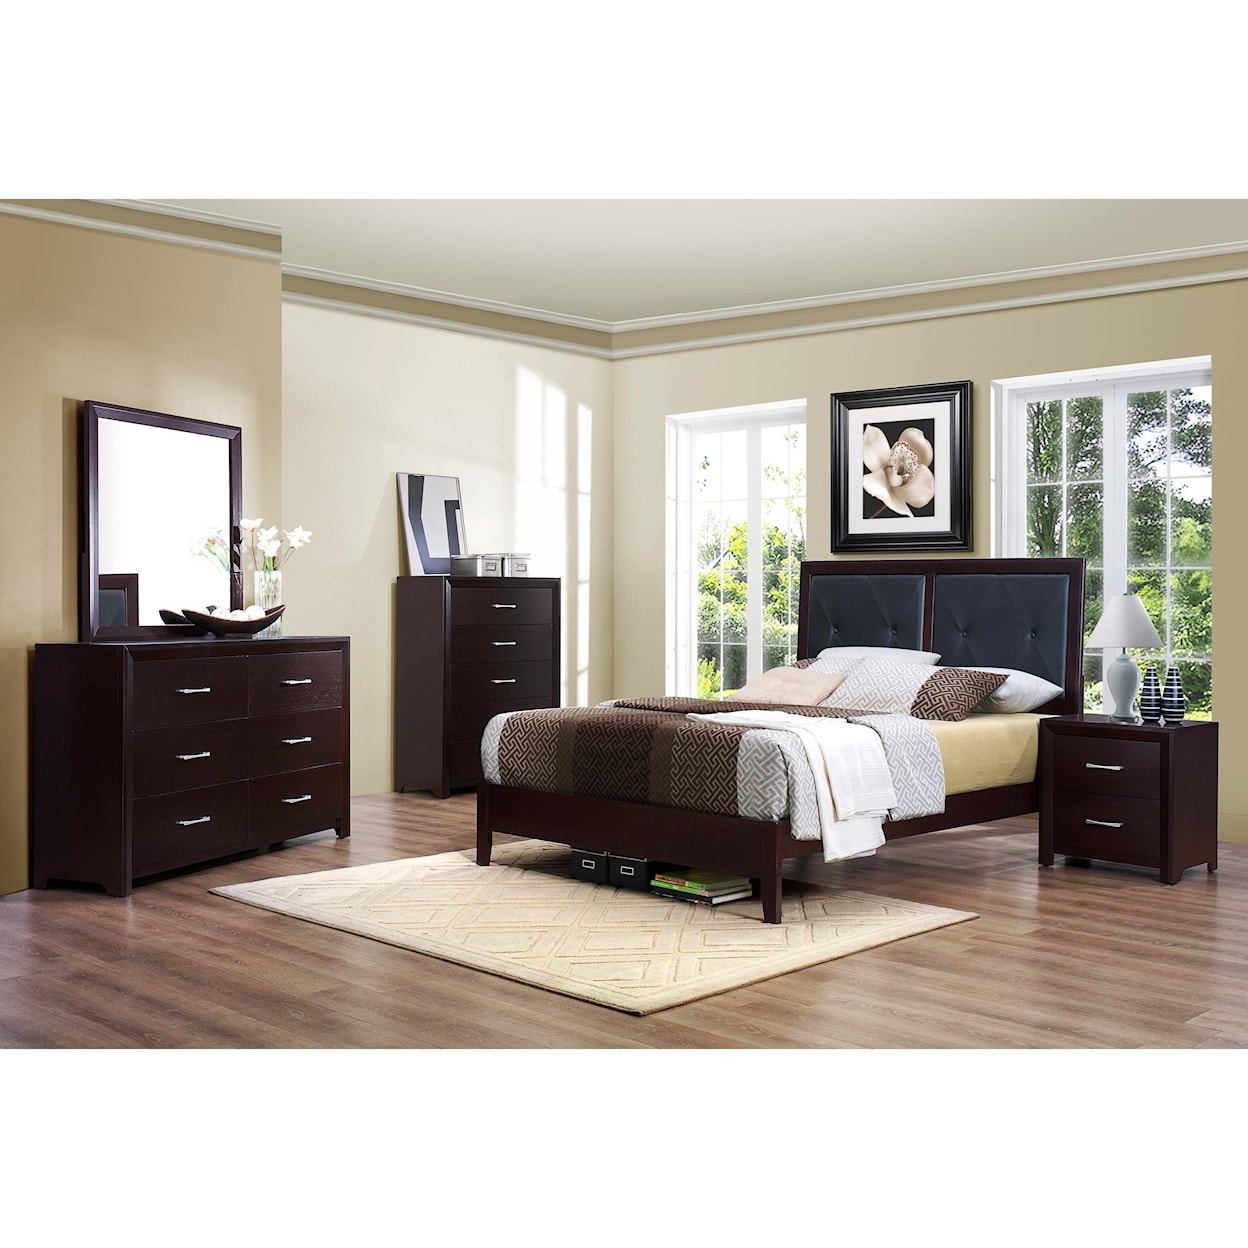 Homelegance Furniture Edina King Bedroom Group